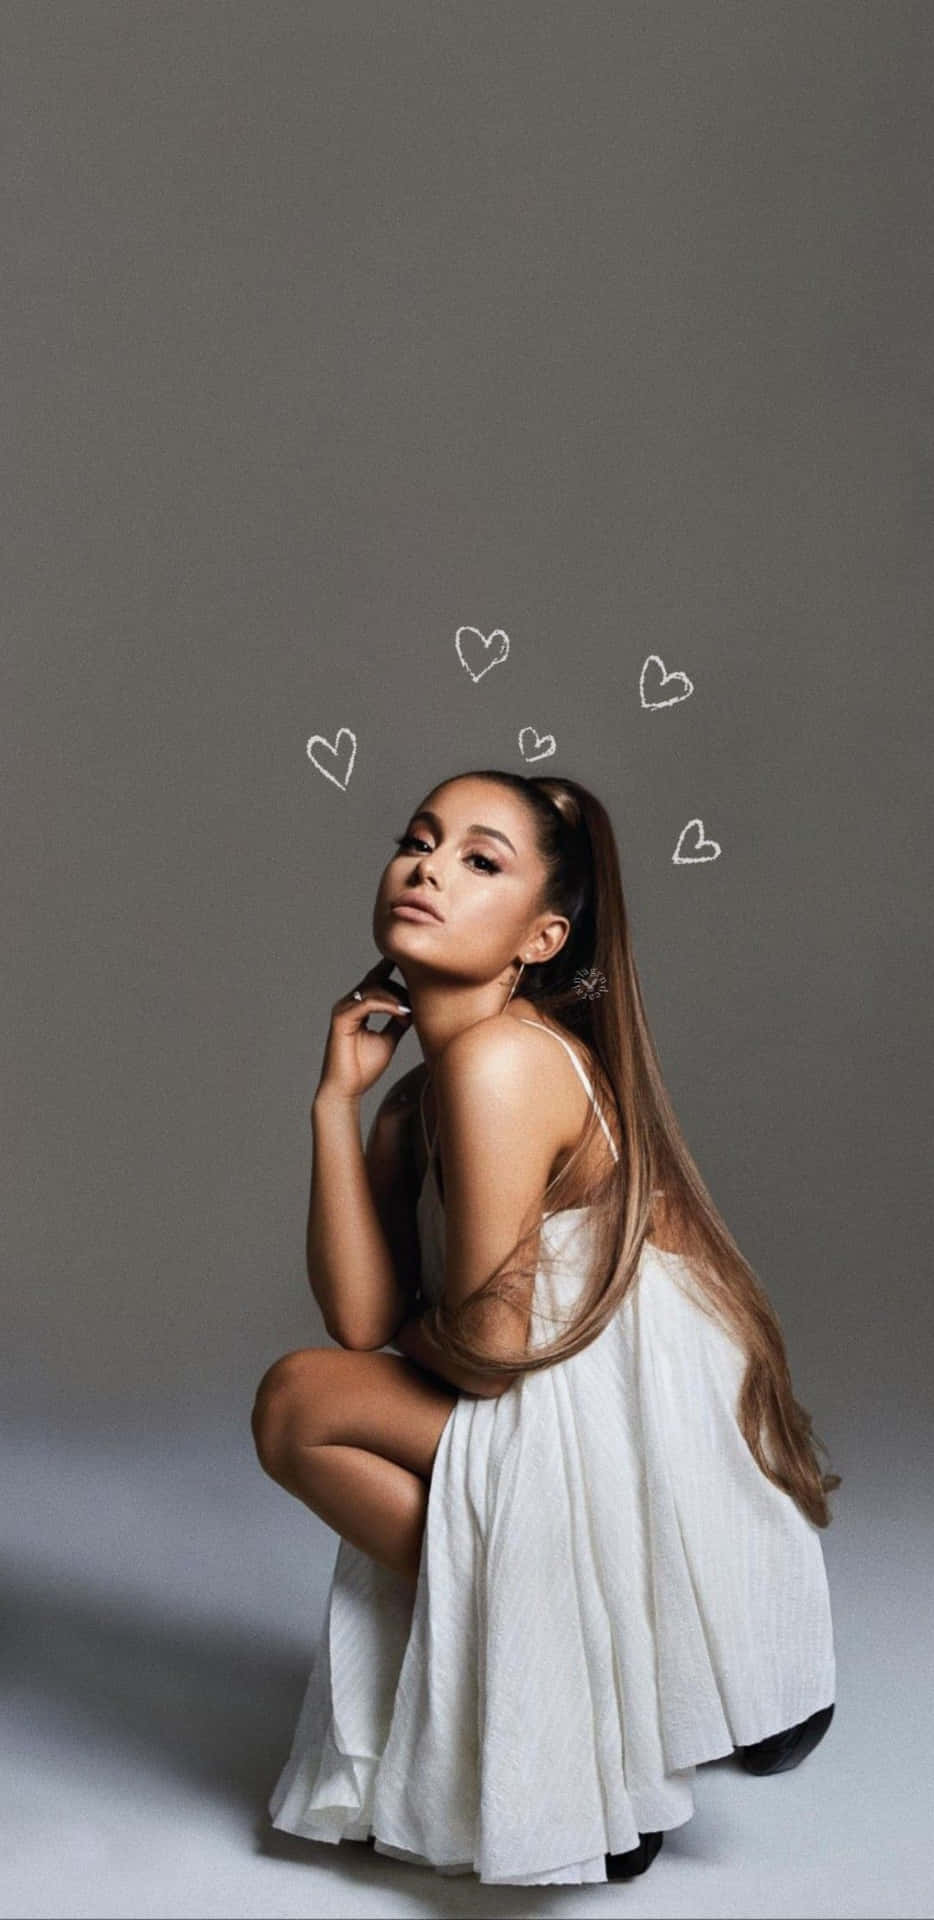 100+] Ariana Grande Wallpapers